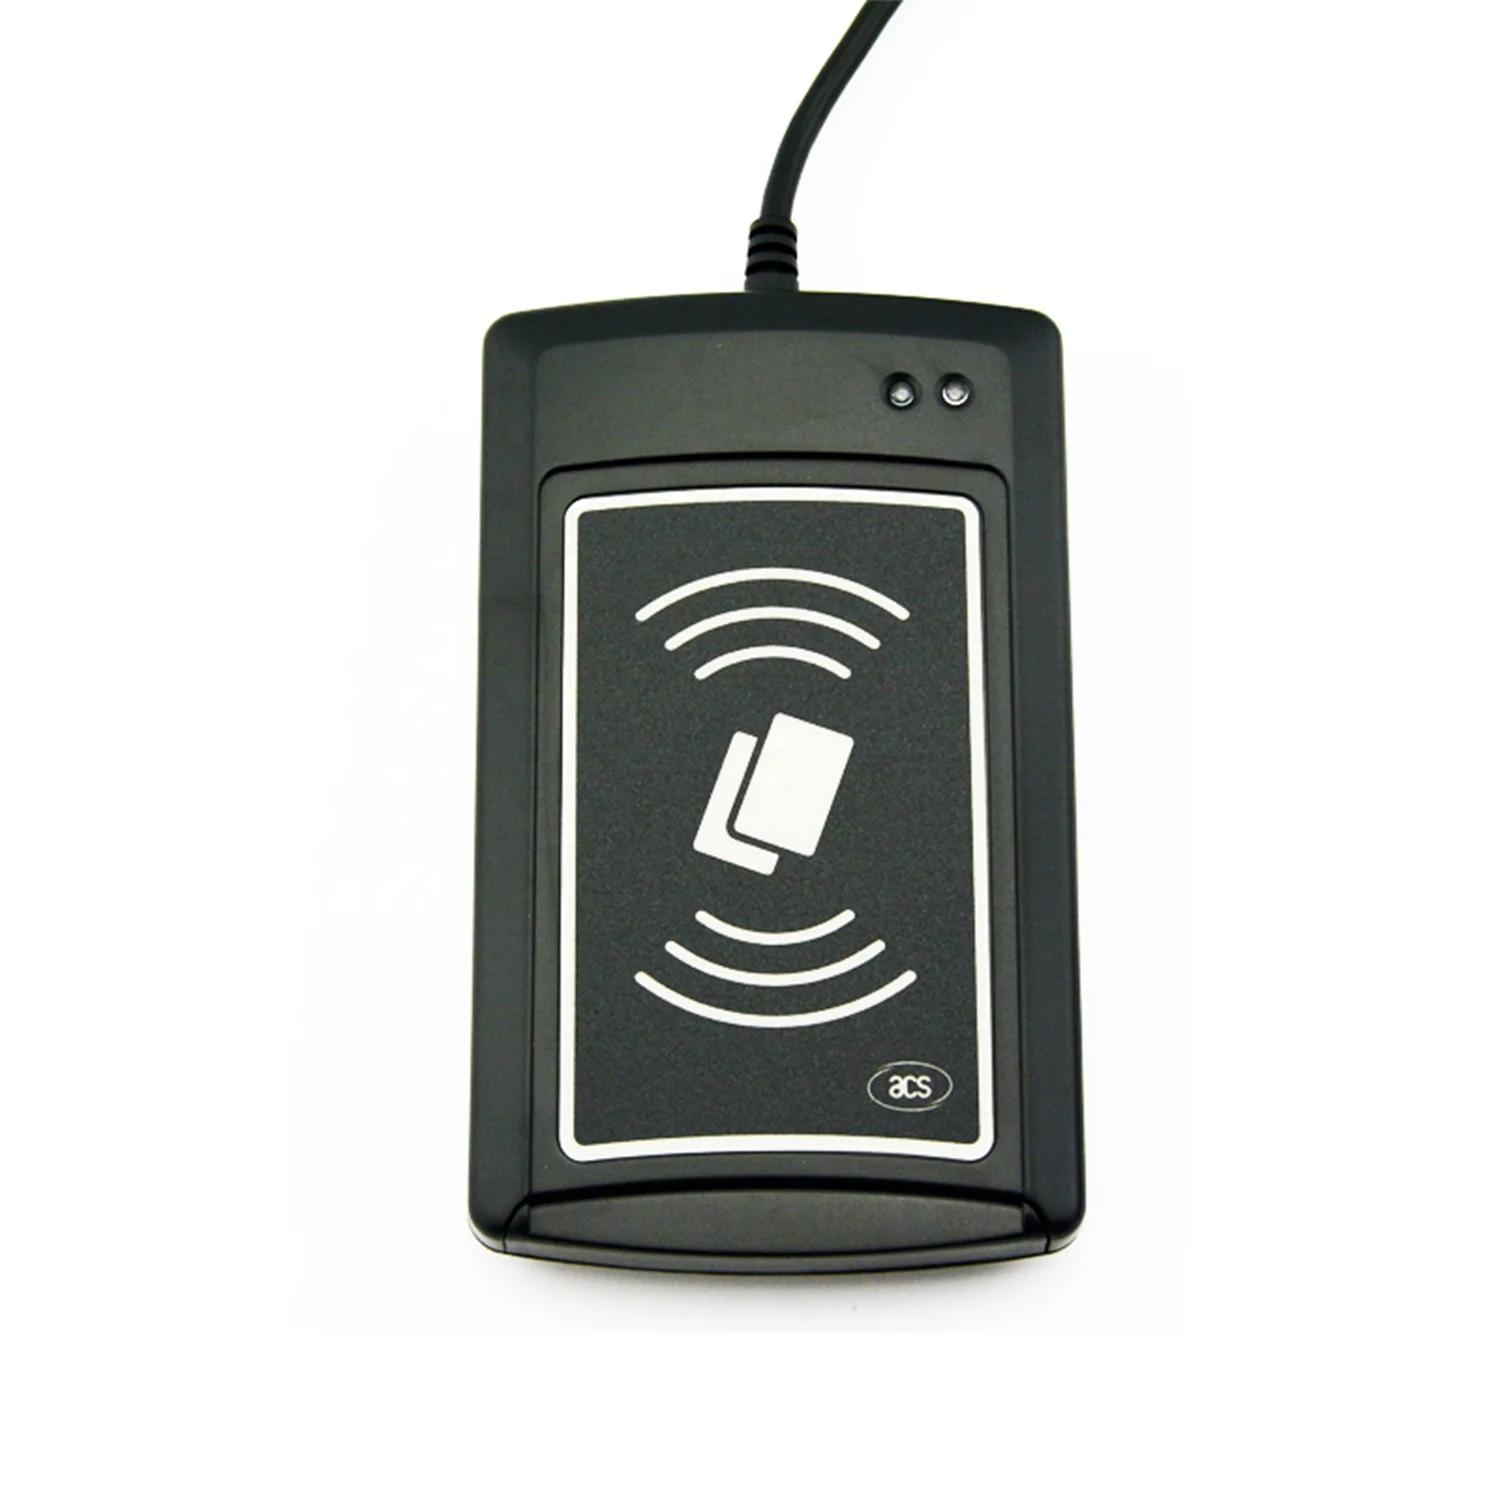 contactless smart card reader